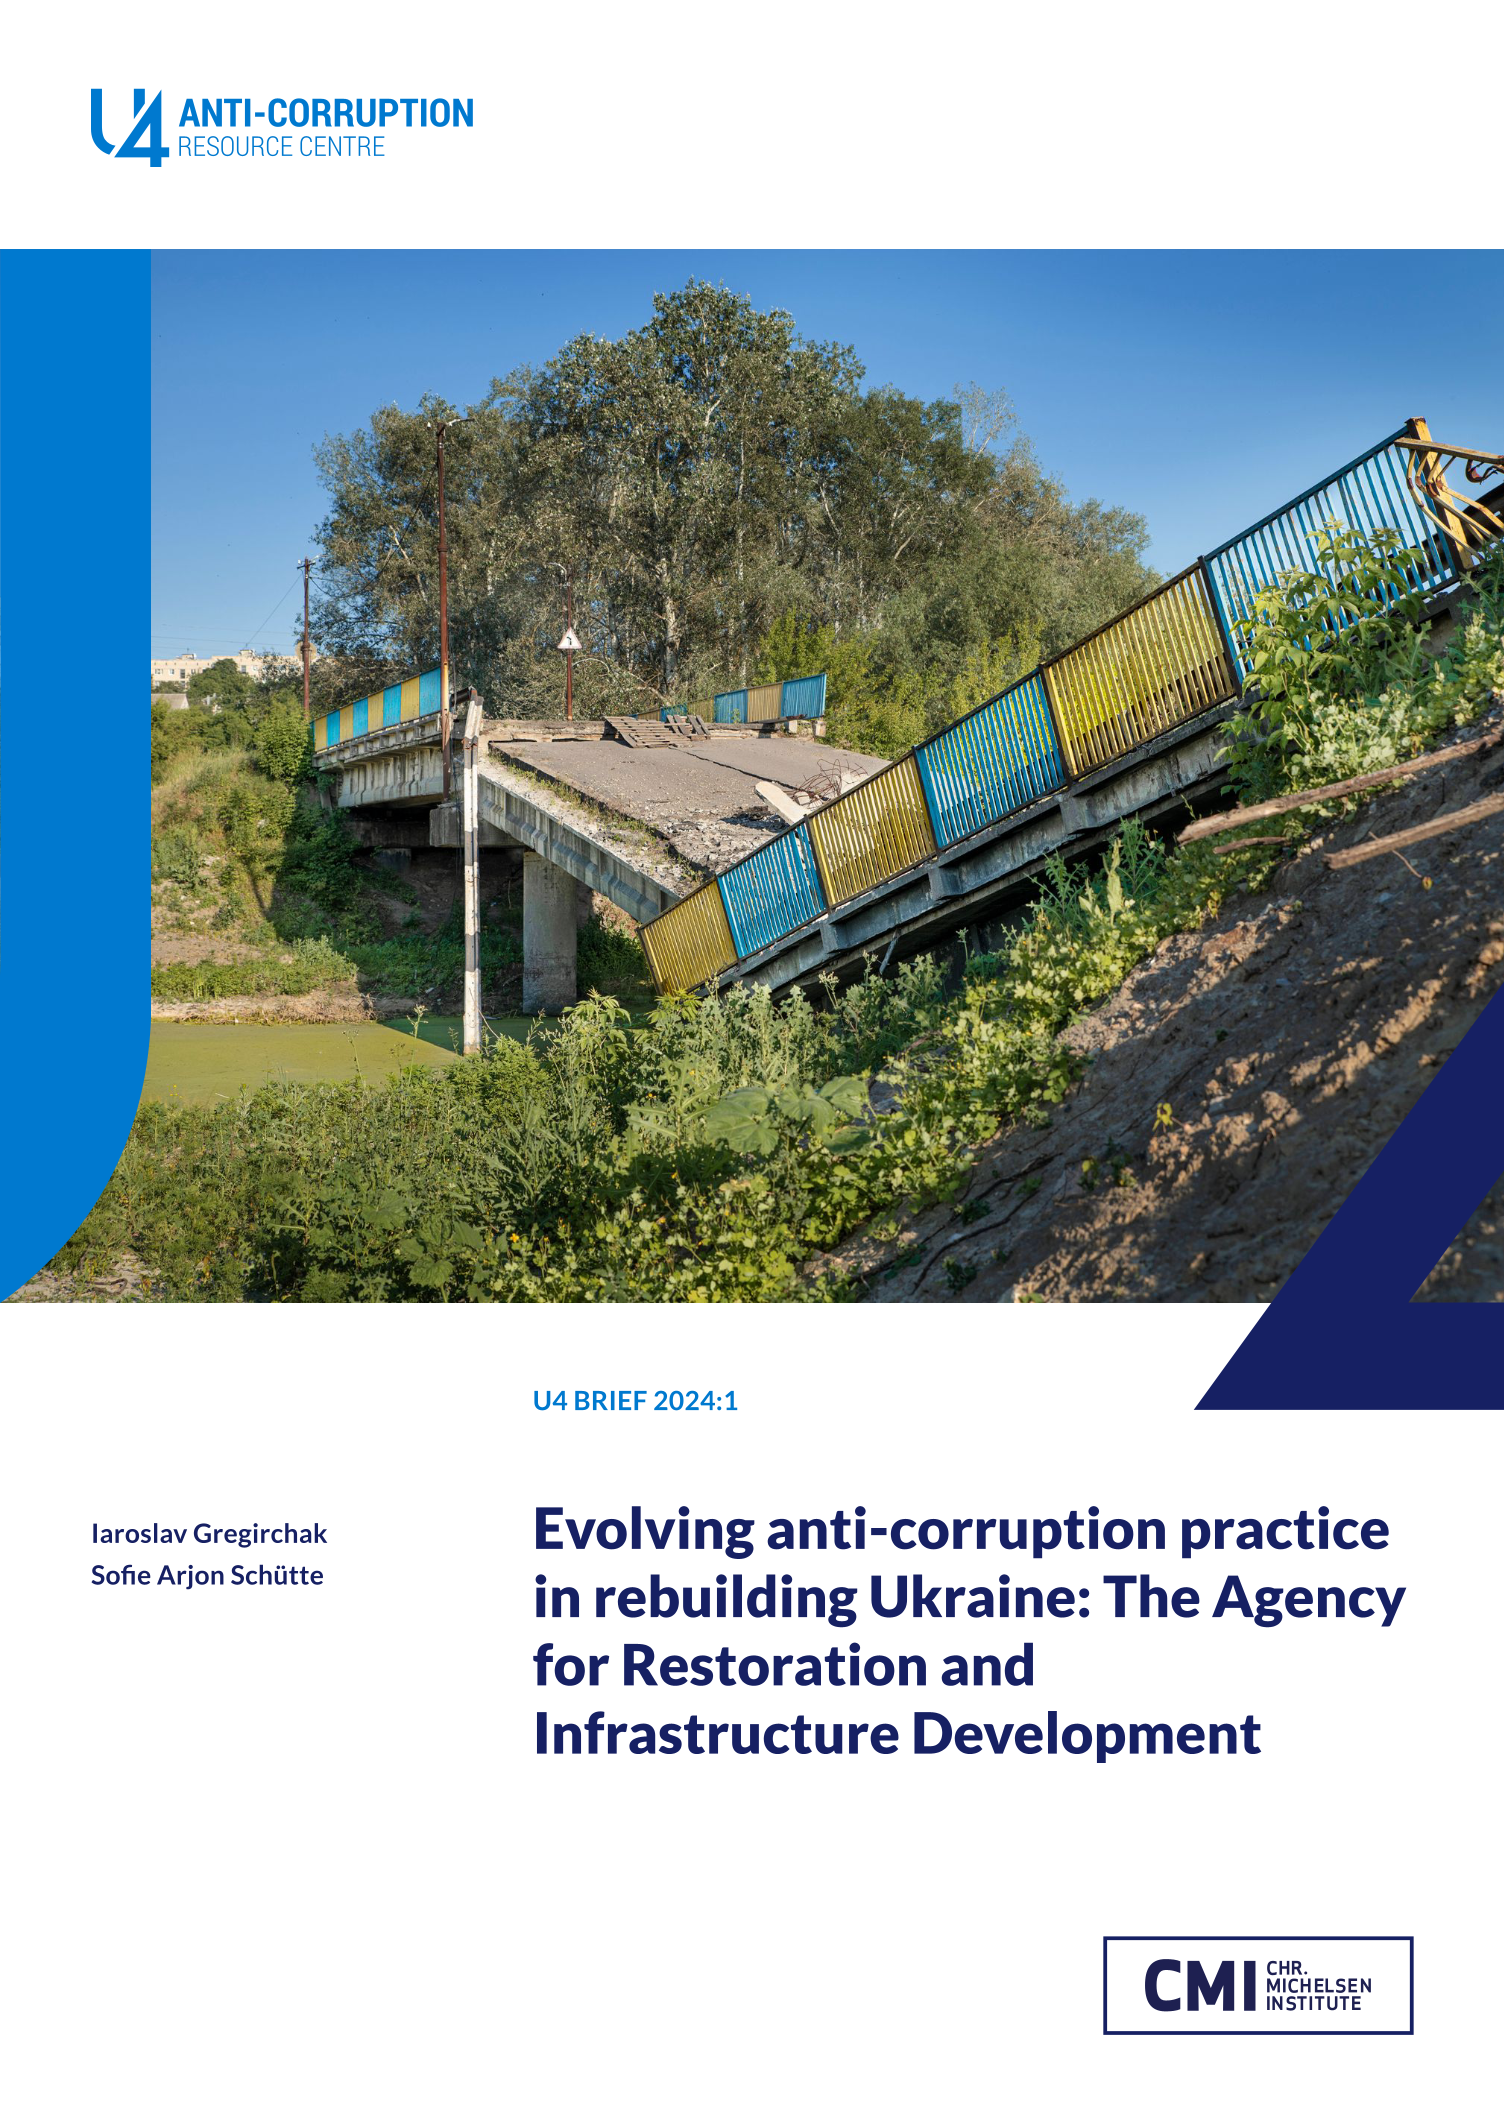 Evolving anti-corruption practice in rebuilding Ukraine: The Agency for Restoration and Infrastructure Development